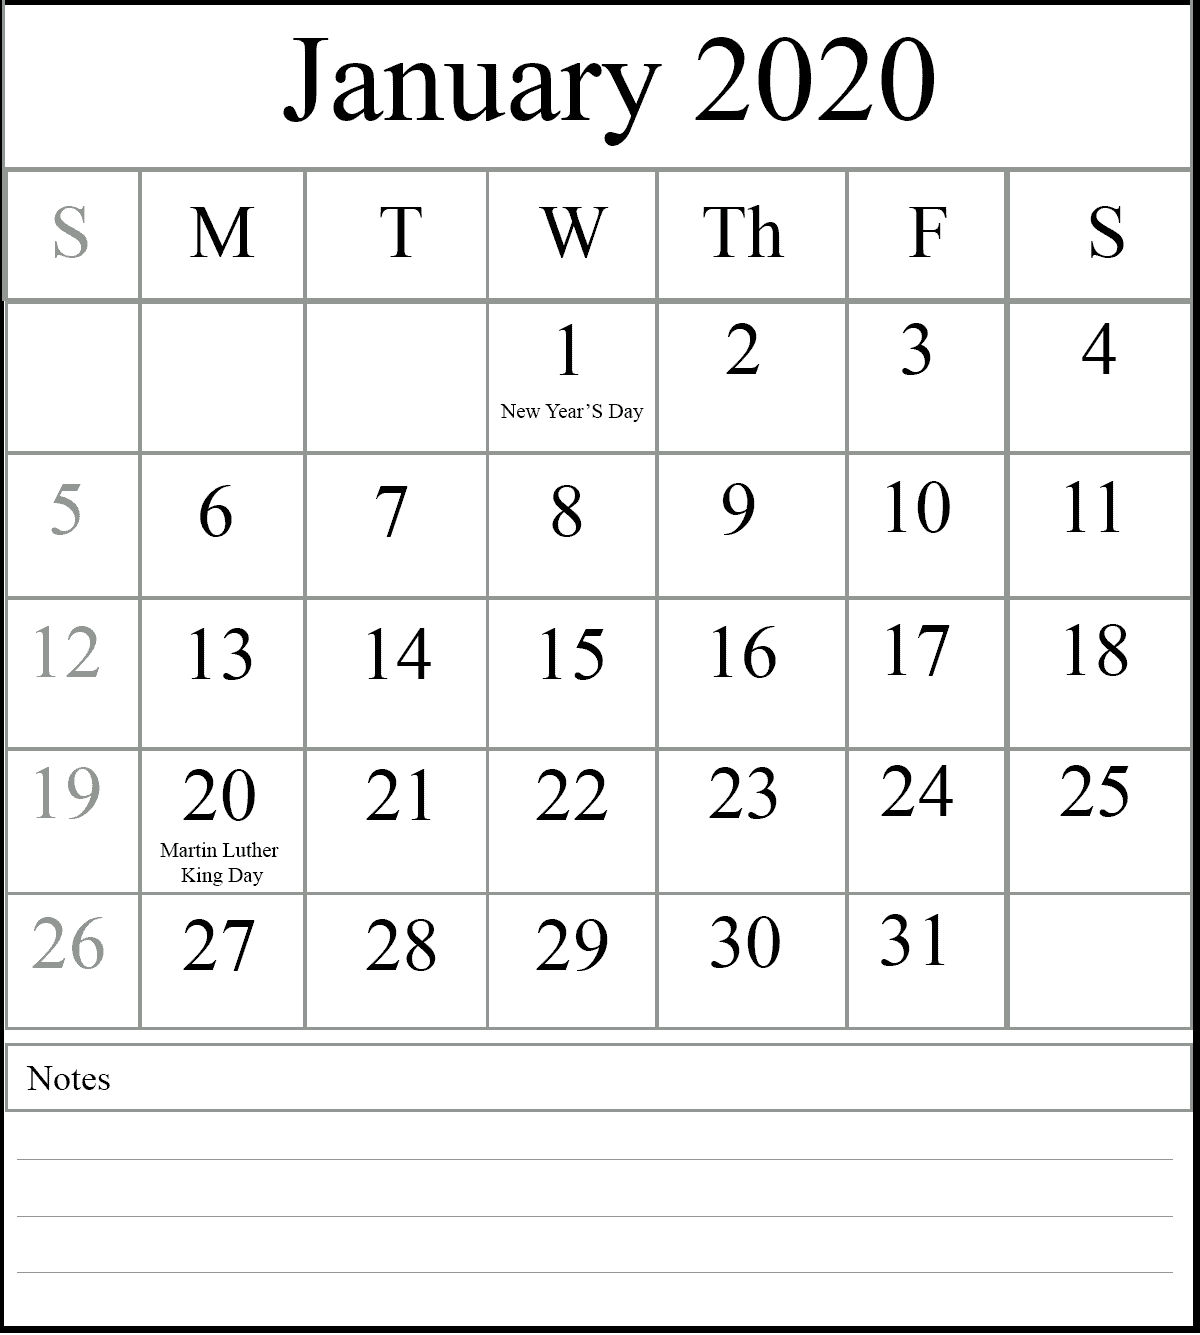 January Calendar Template, January 2020 Calendar Word